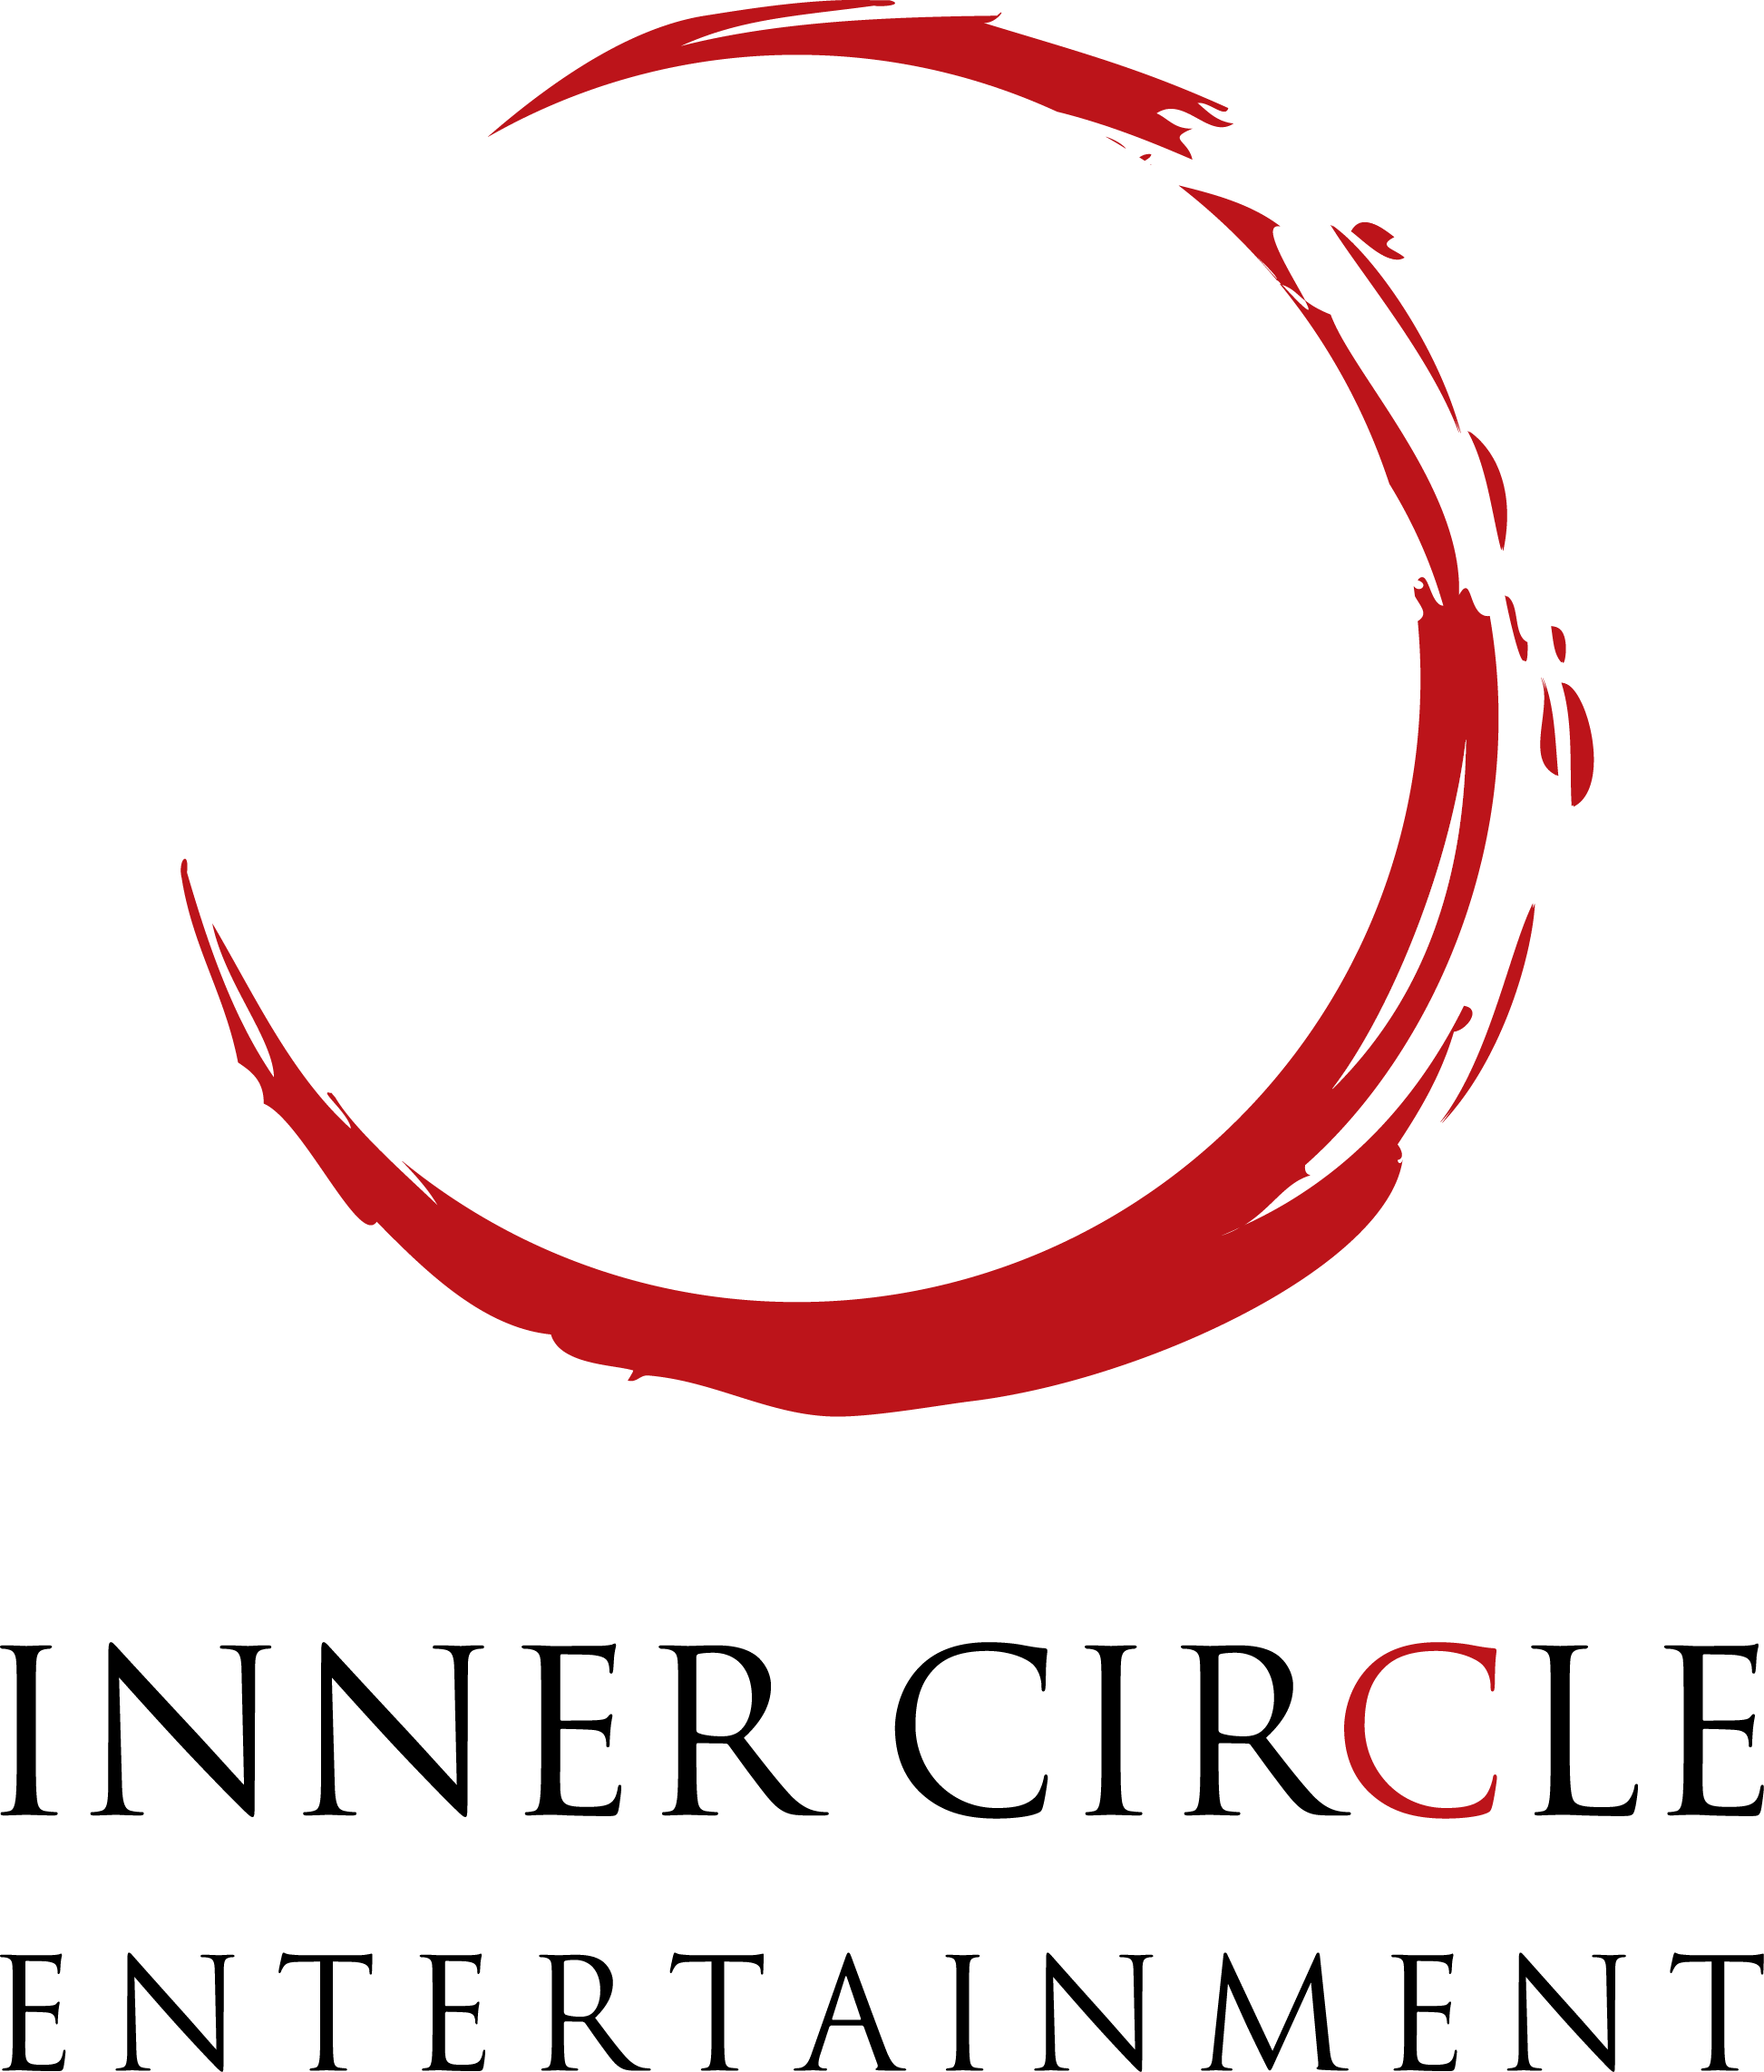 Red Circle Entertainment Logo - innercircle.co.za